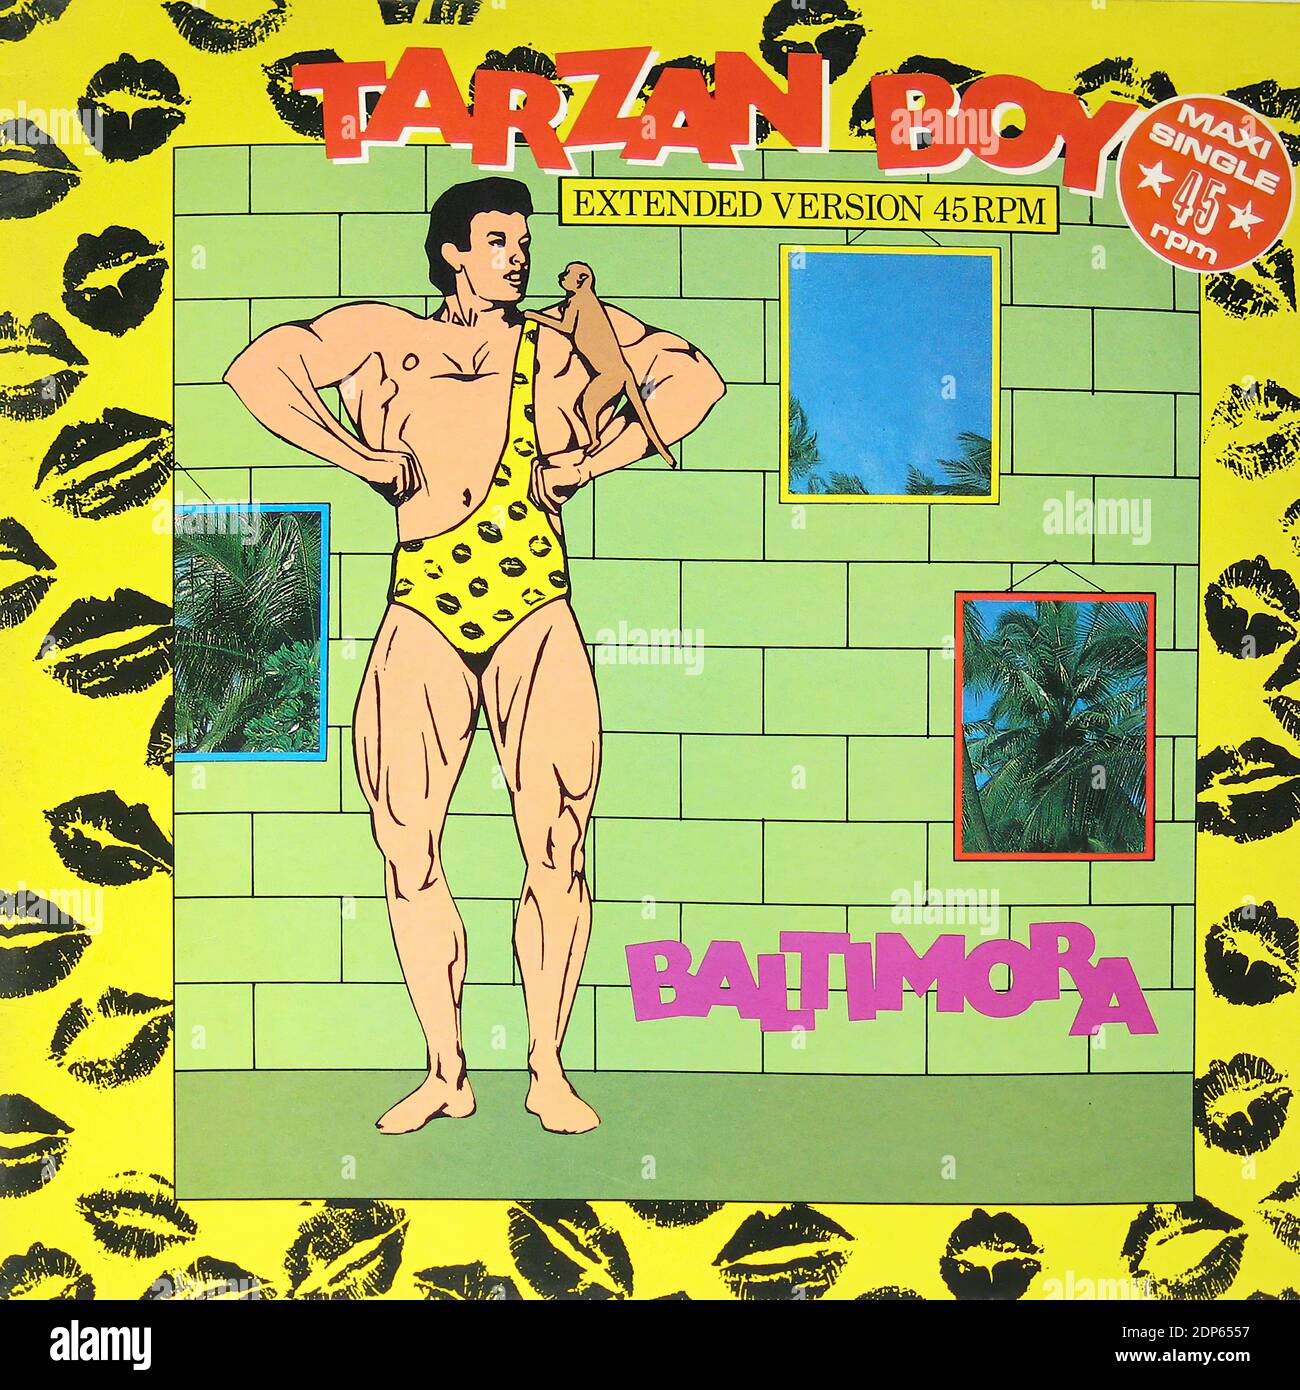 Baltimora Tarzan Boy Extended Version 12 Maxi Single - Vintage Vinyl Record  Cover Stock Photo - Alamy